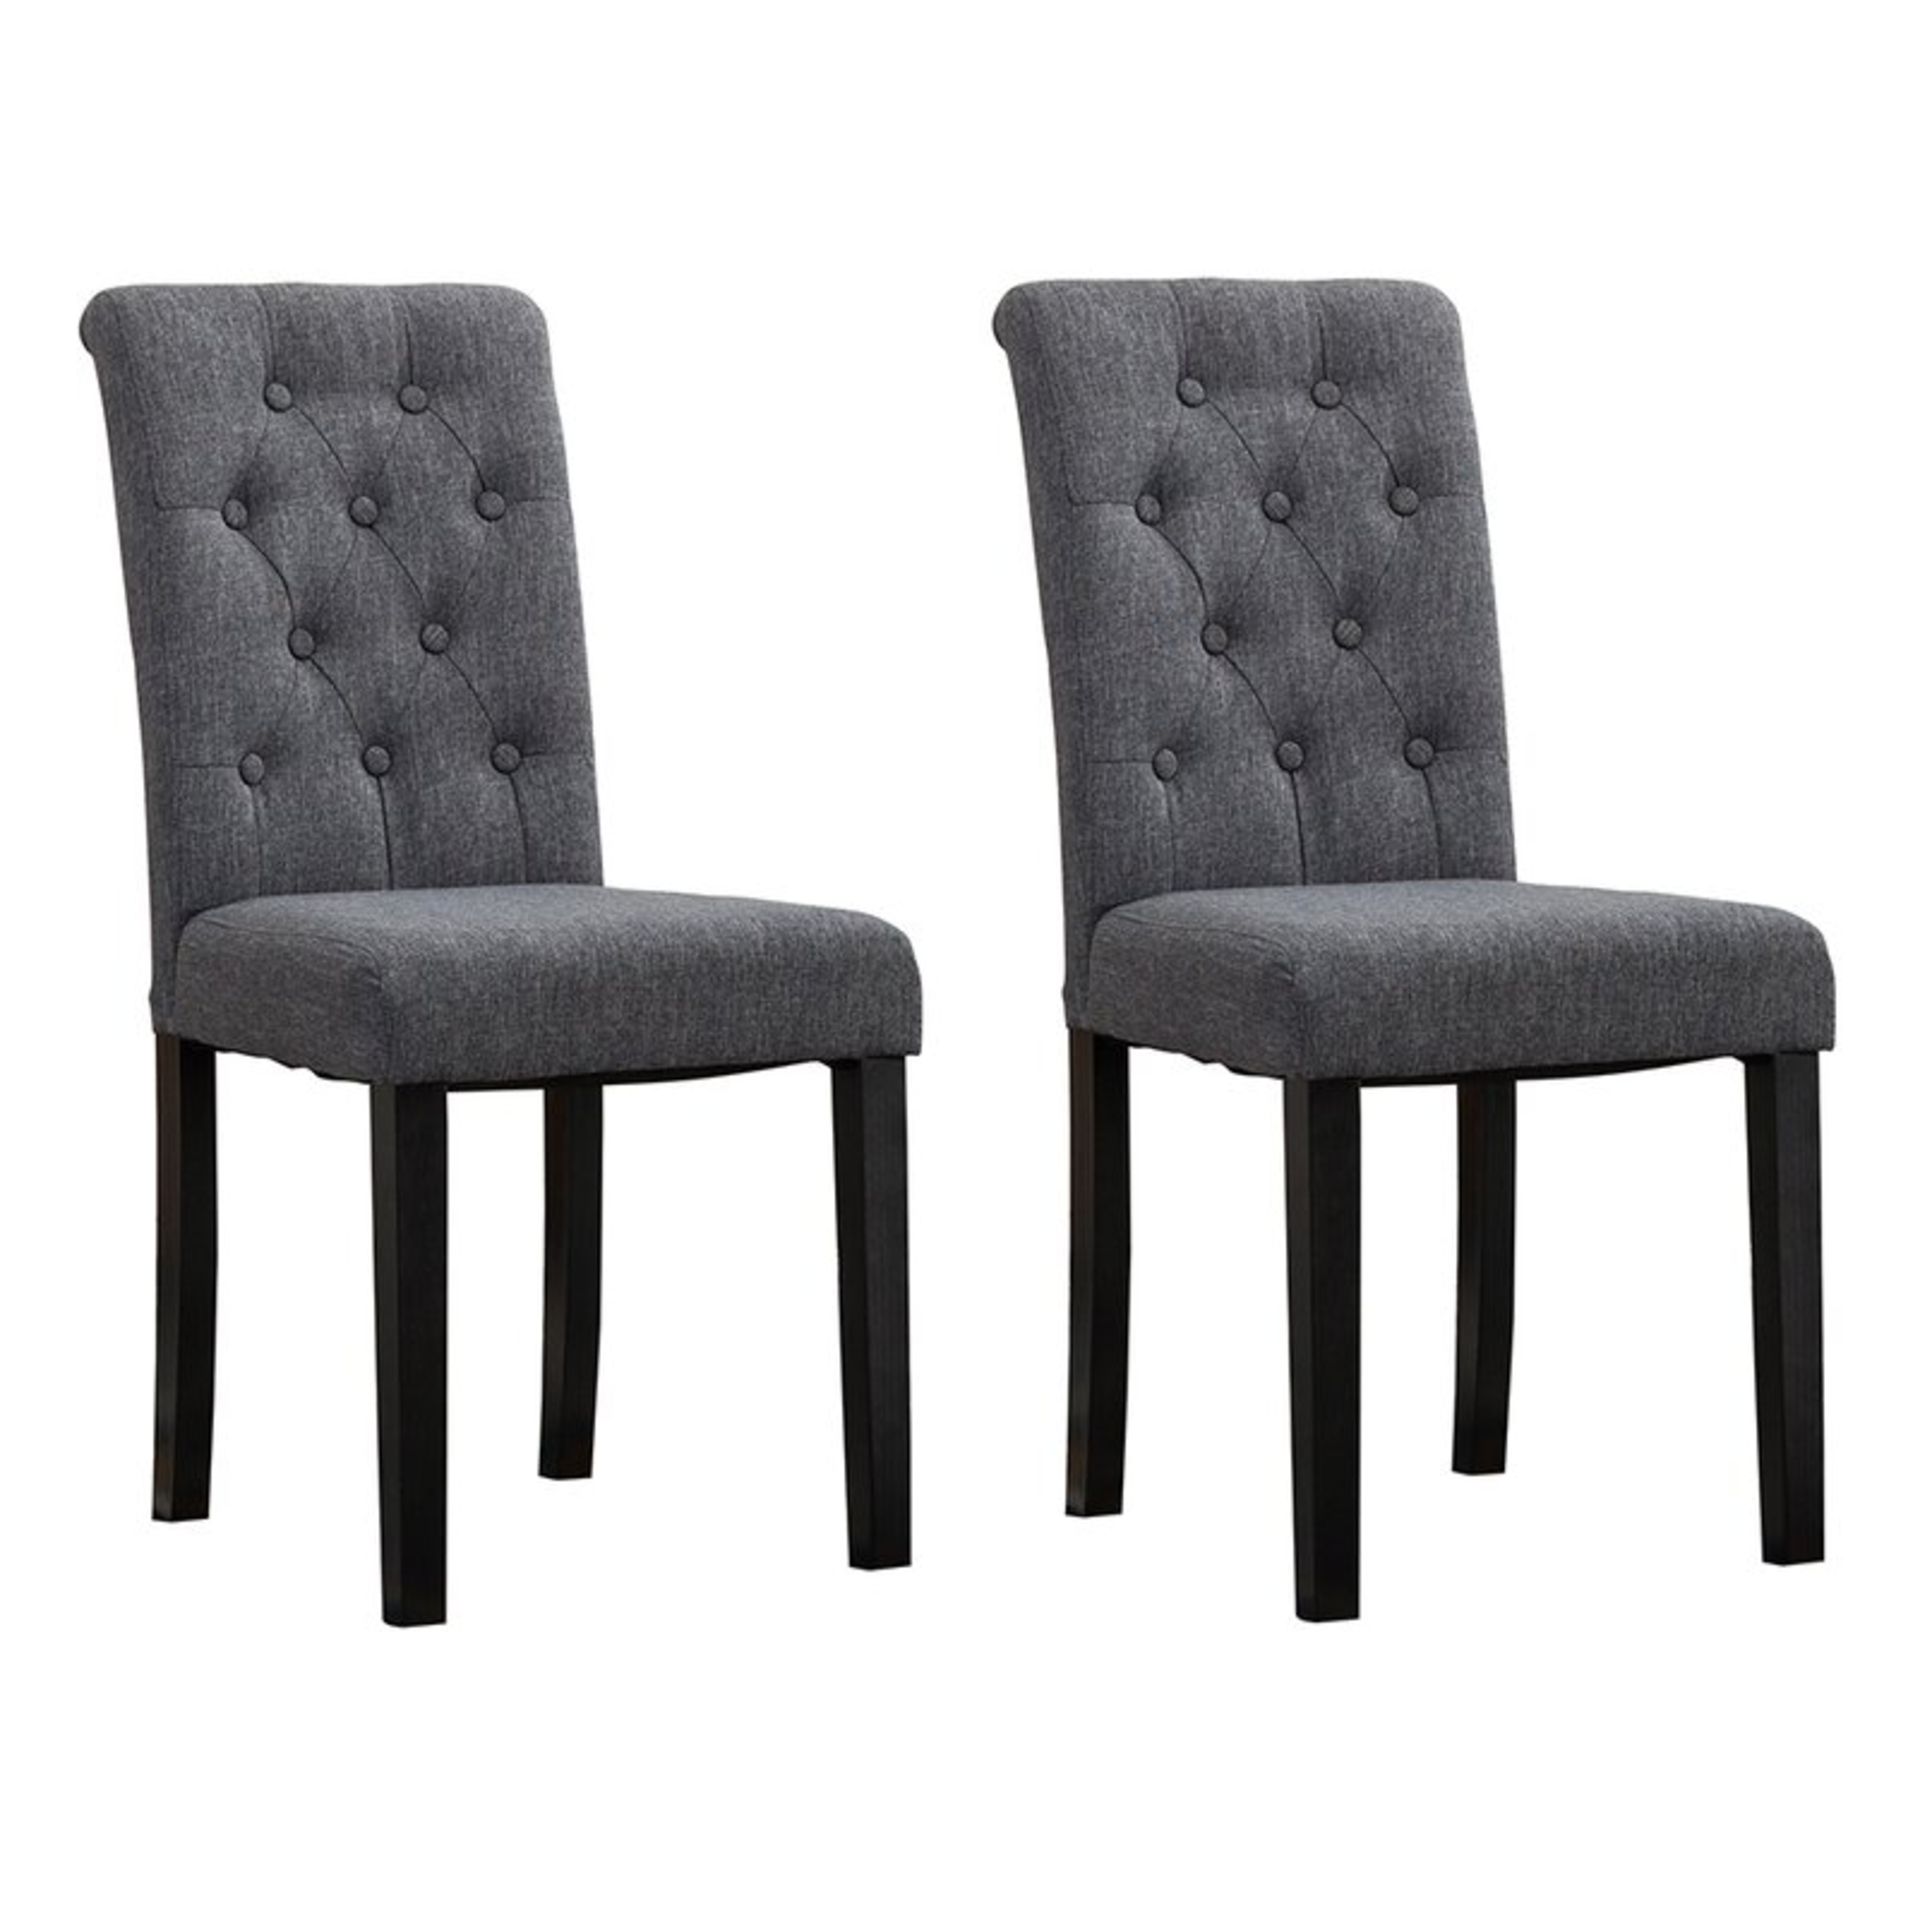 Brainard Tufted Linen Upholstered Side Chair (Set of 2) - RRP £100.